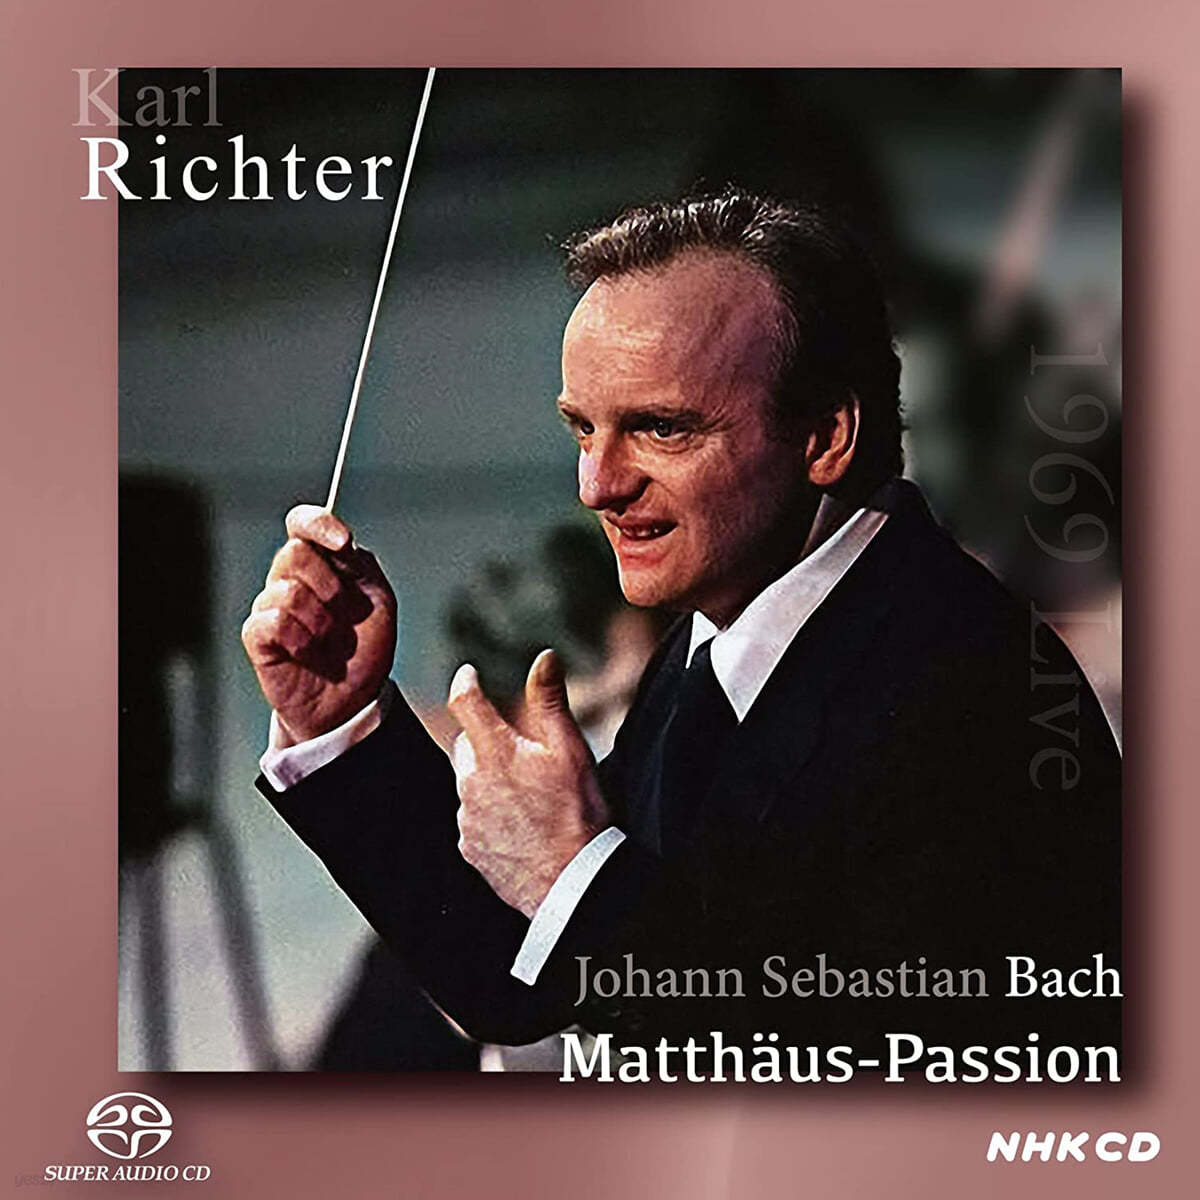 Karl Richter 바흐: 마태수난곡 - 칼 리히터 (Bach: Matthaus-Passion BWV244)